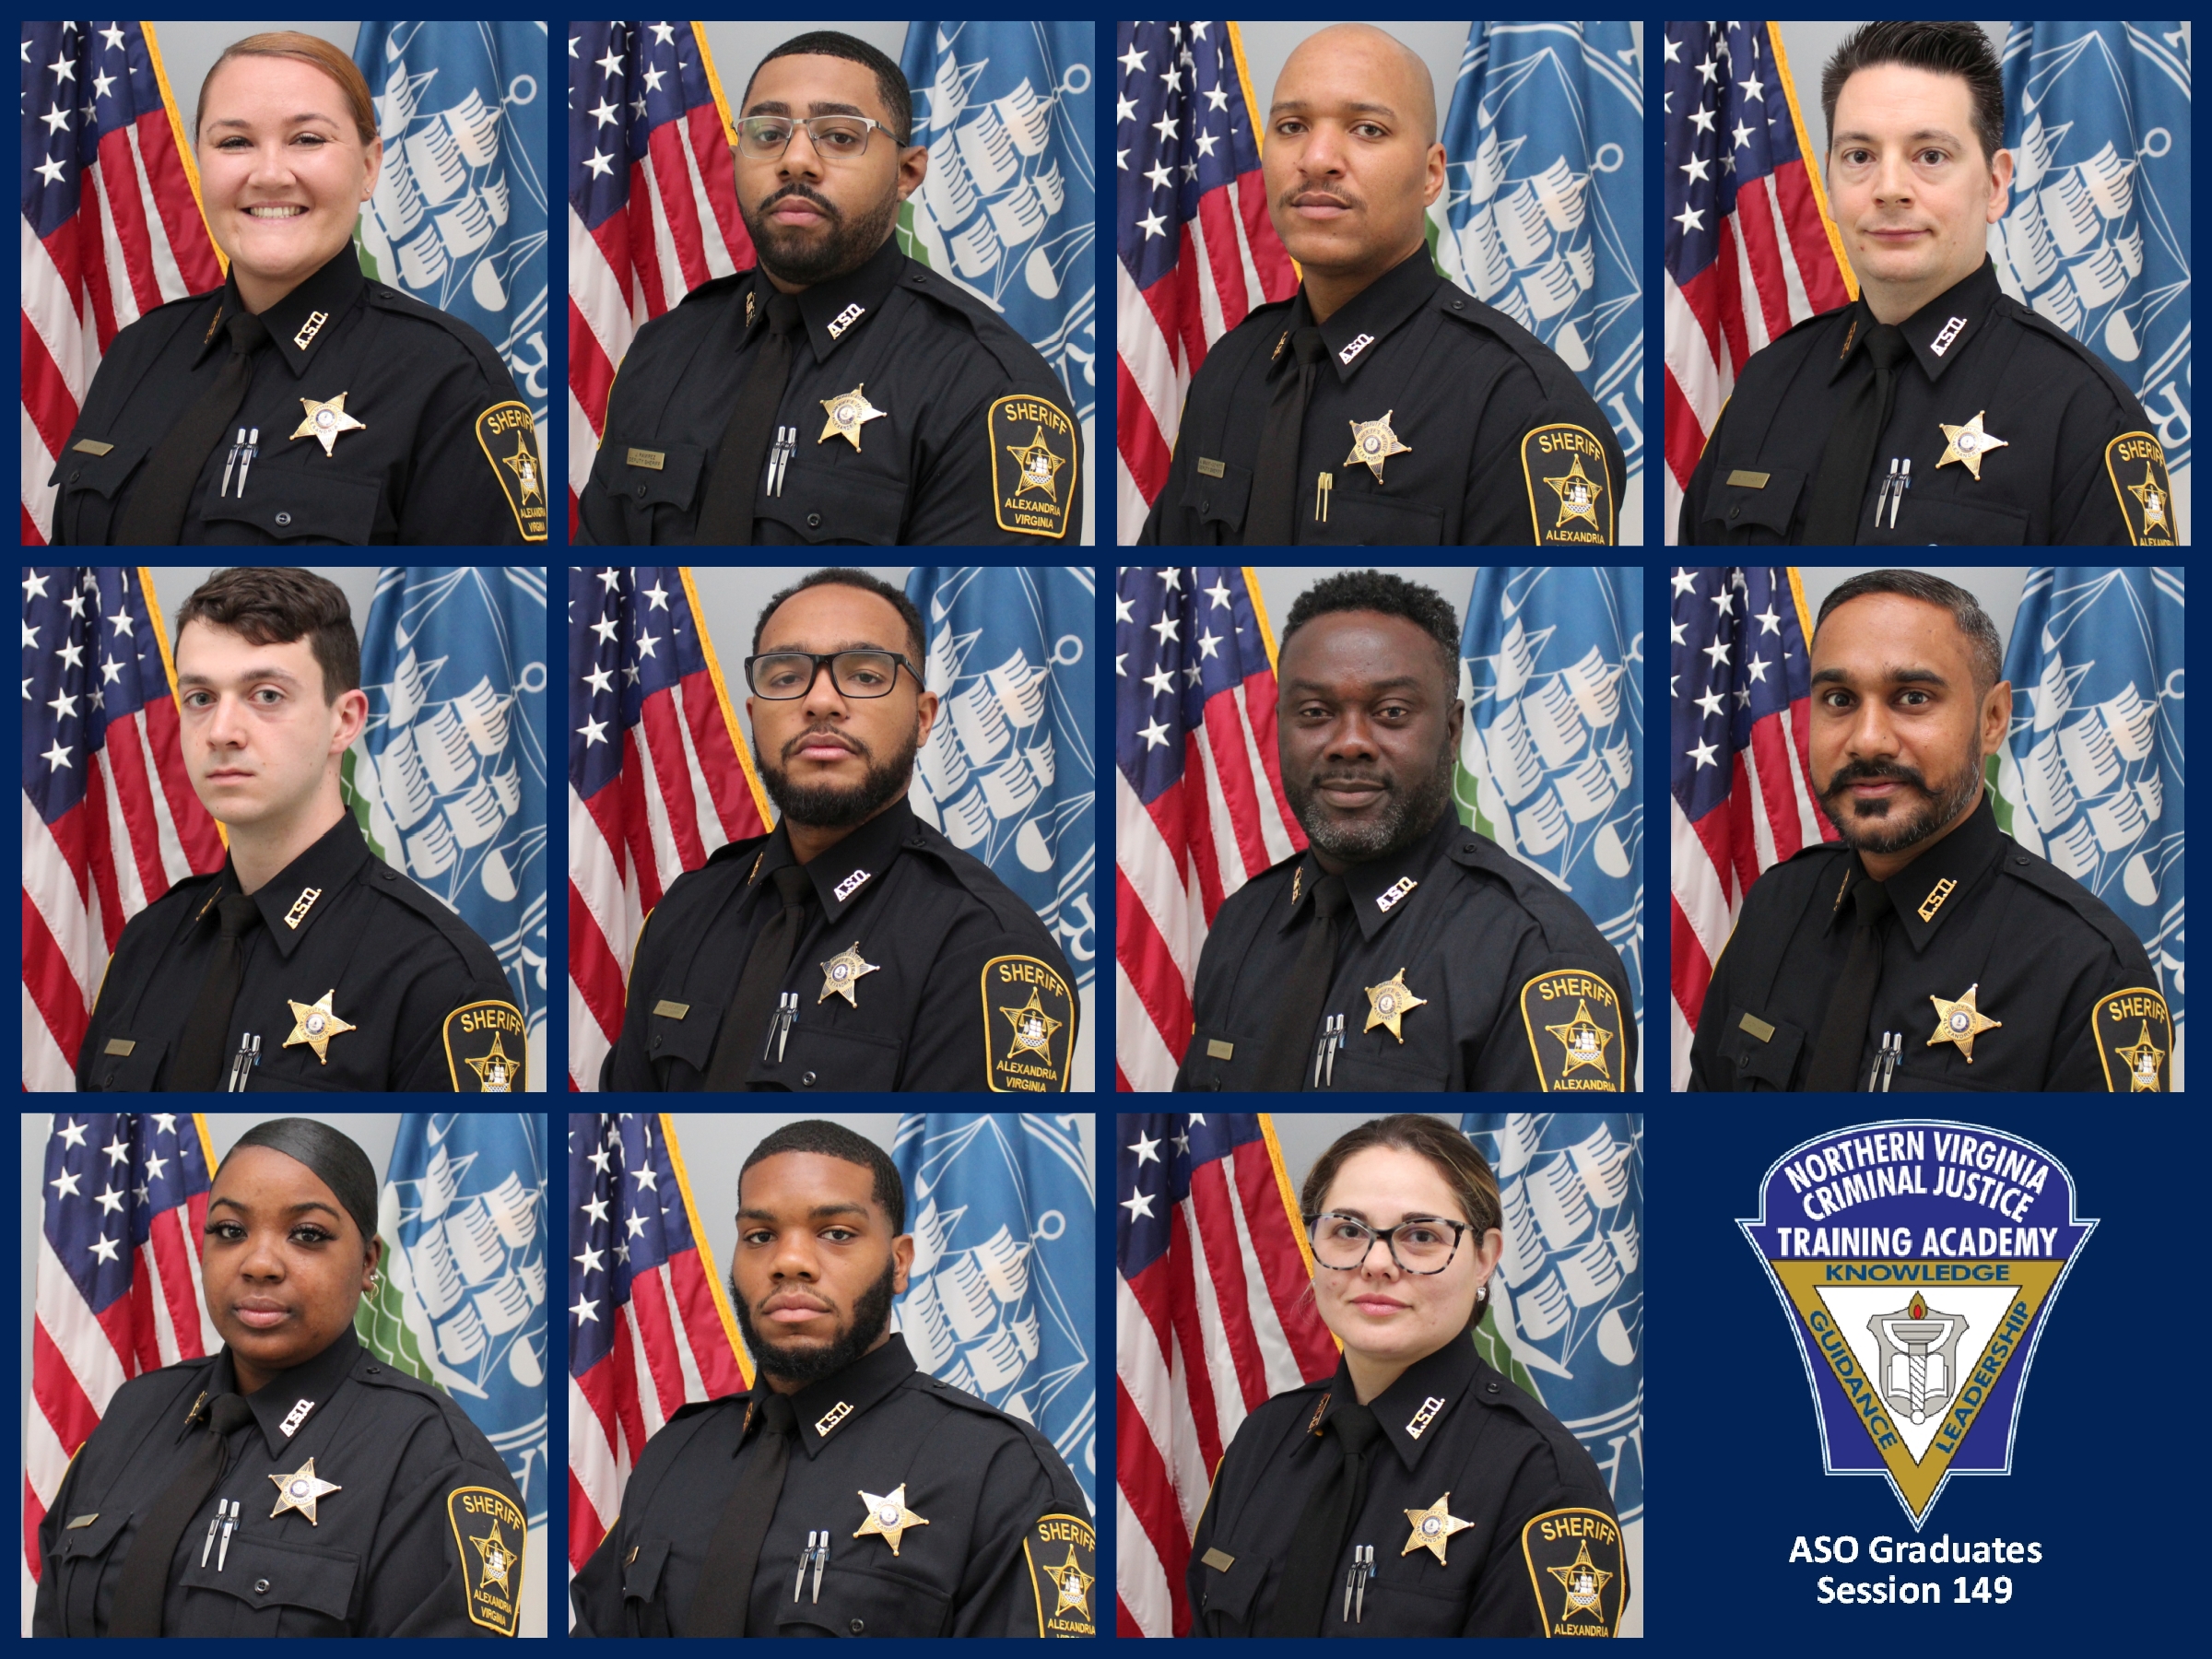 portraits of 11 deputies